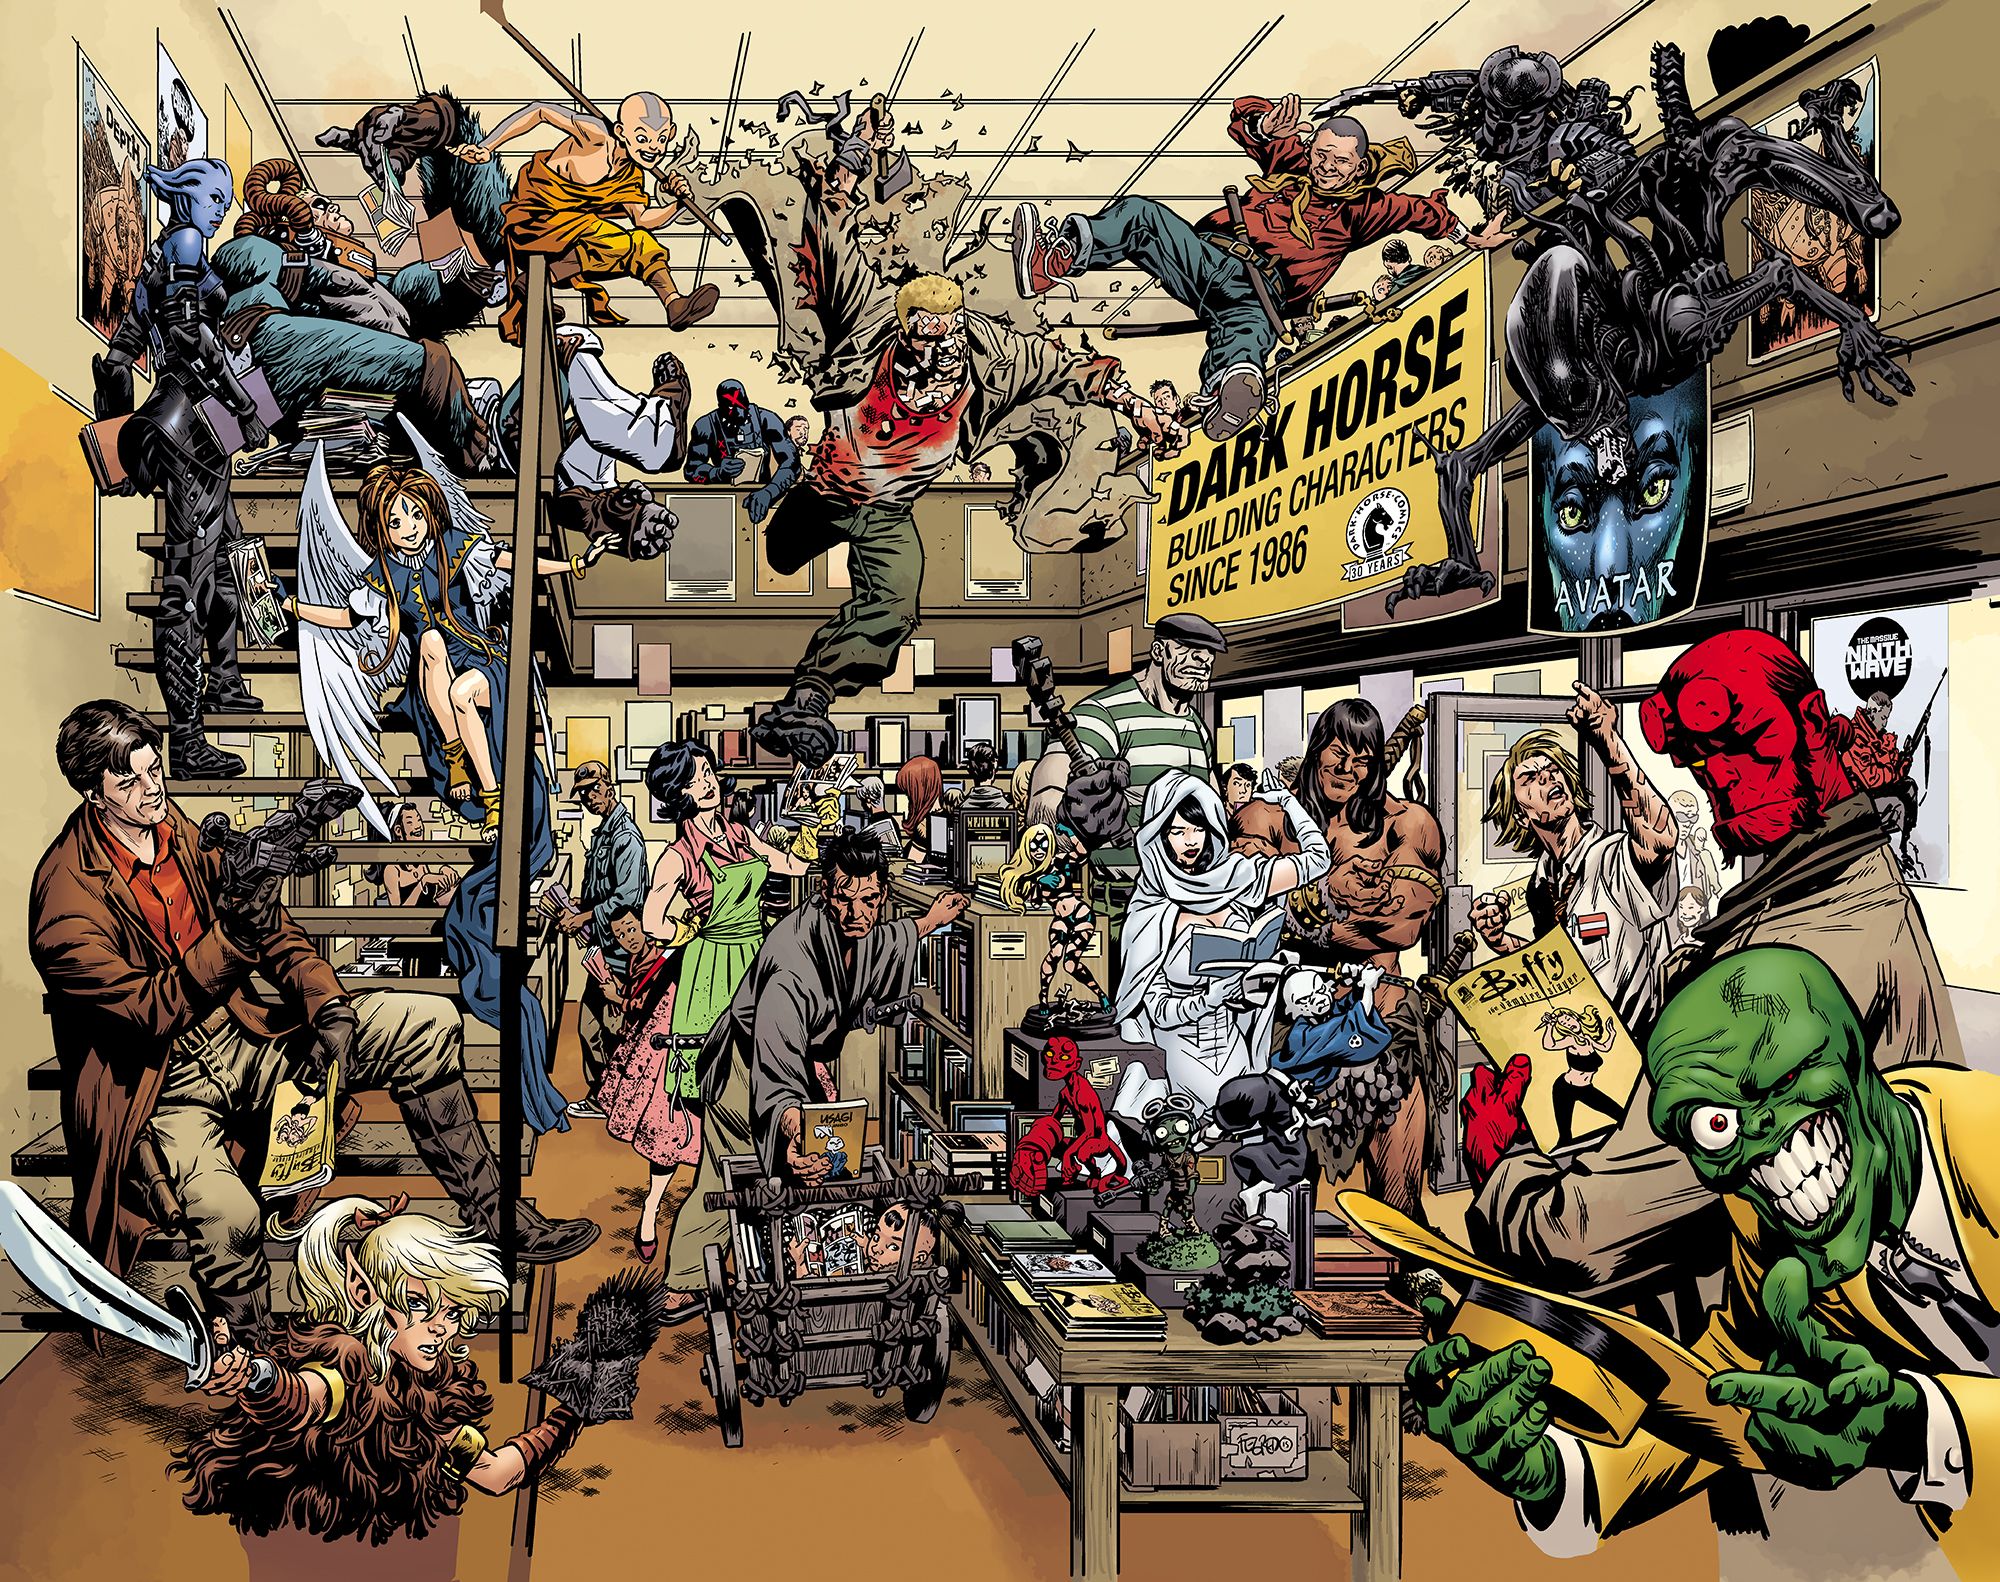 Amazing Dark Horse Comics Pictures & Backgrounds